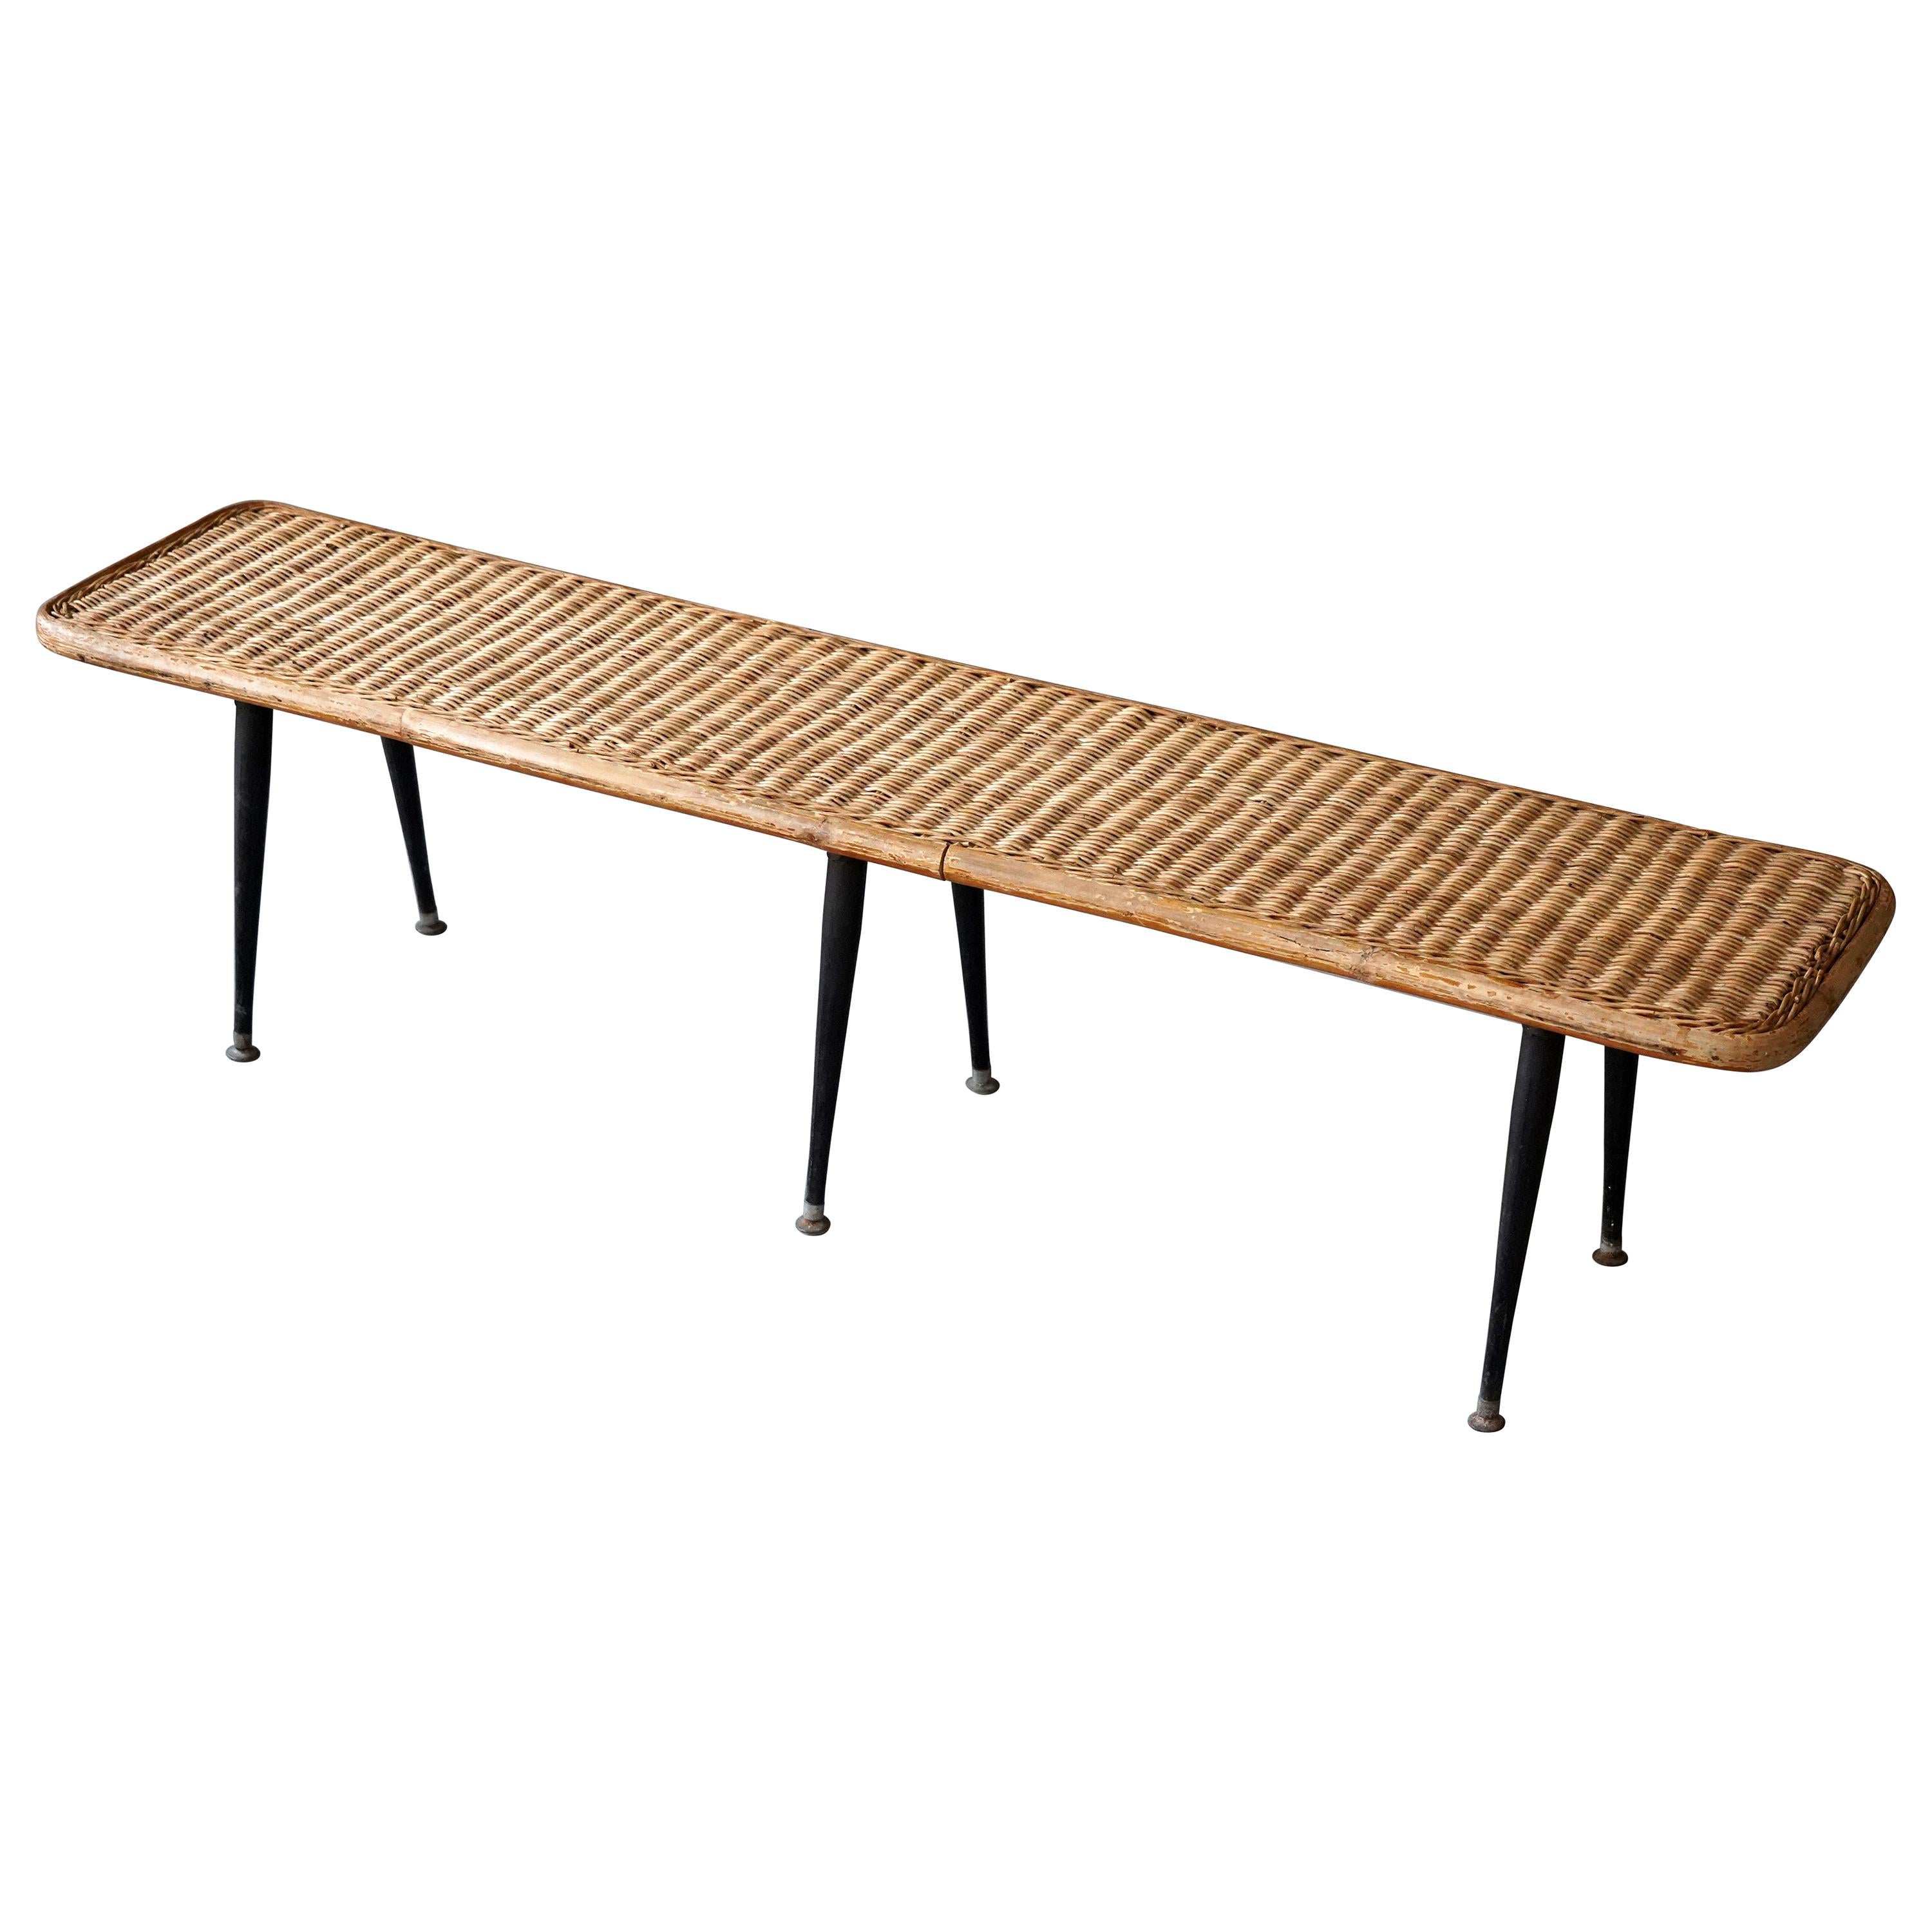 American Designer, Minimalist Bench, Woven Rattan, Bamboo, Lacquered Steel 1950s